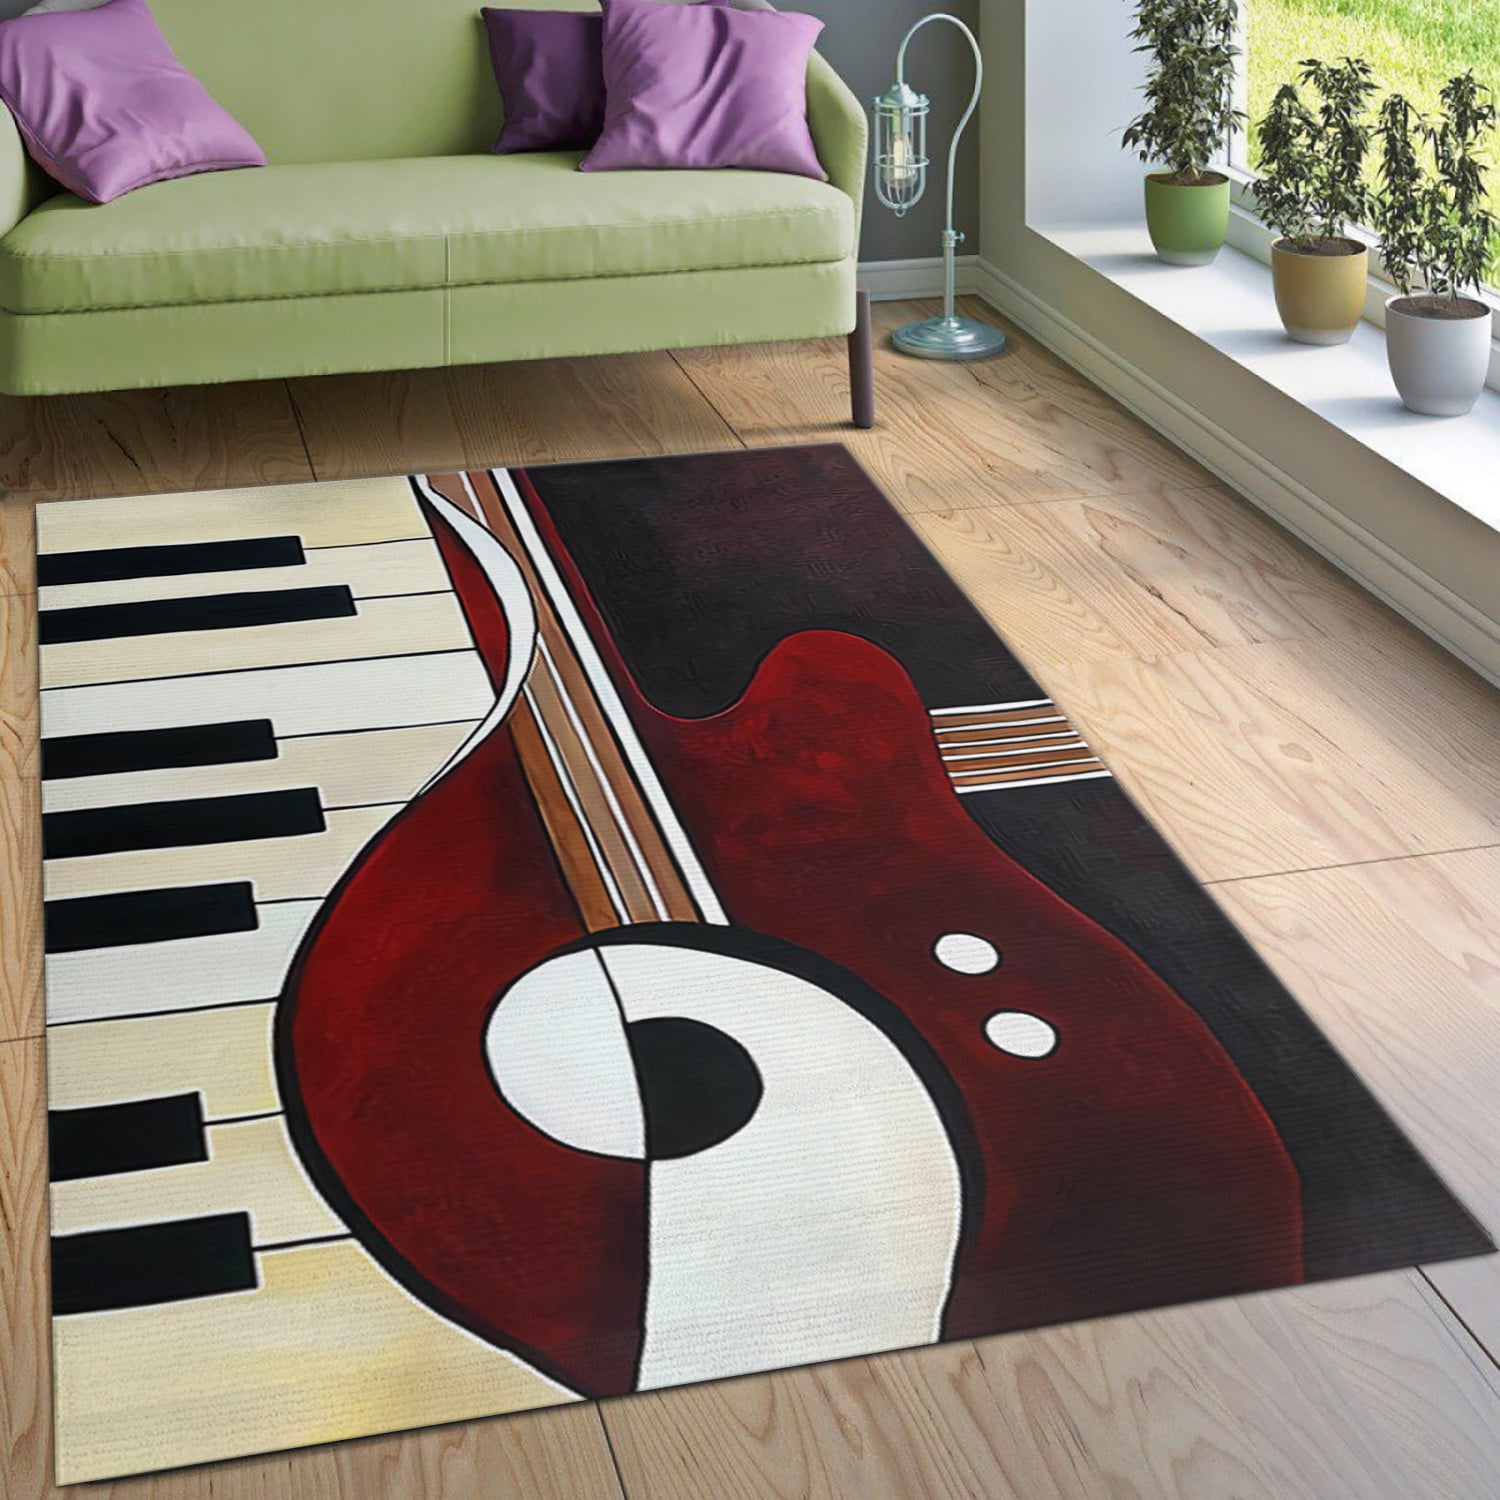 Piano Guitar Area Rugs Living Room Carpet Christmas Gift Floor Decor The US Decor